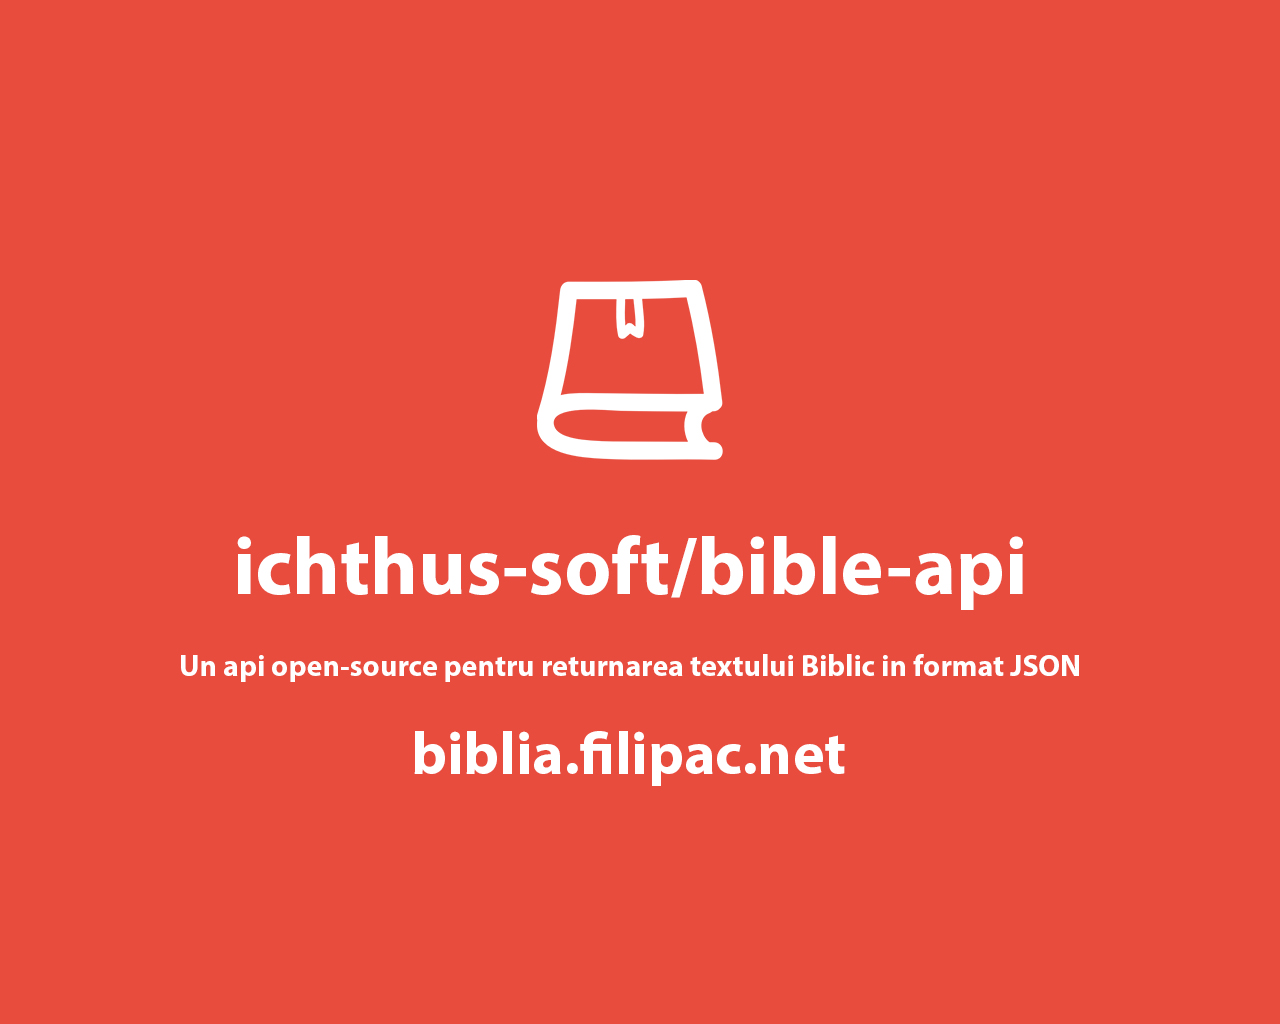 ichthus-soft/bible-api